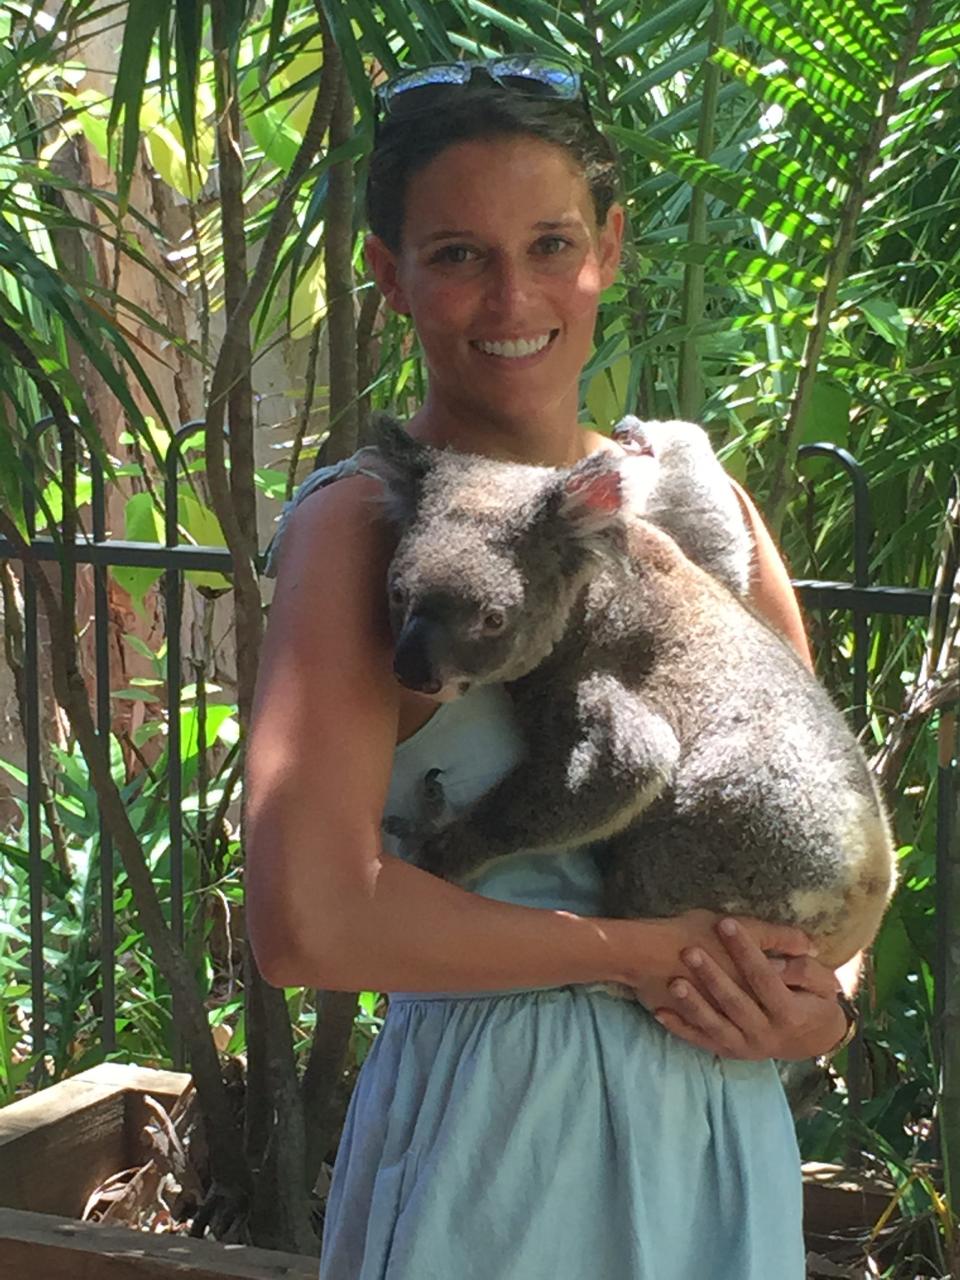 Cecilia with a koala on a visit to Australia